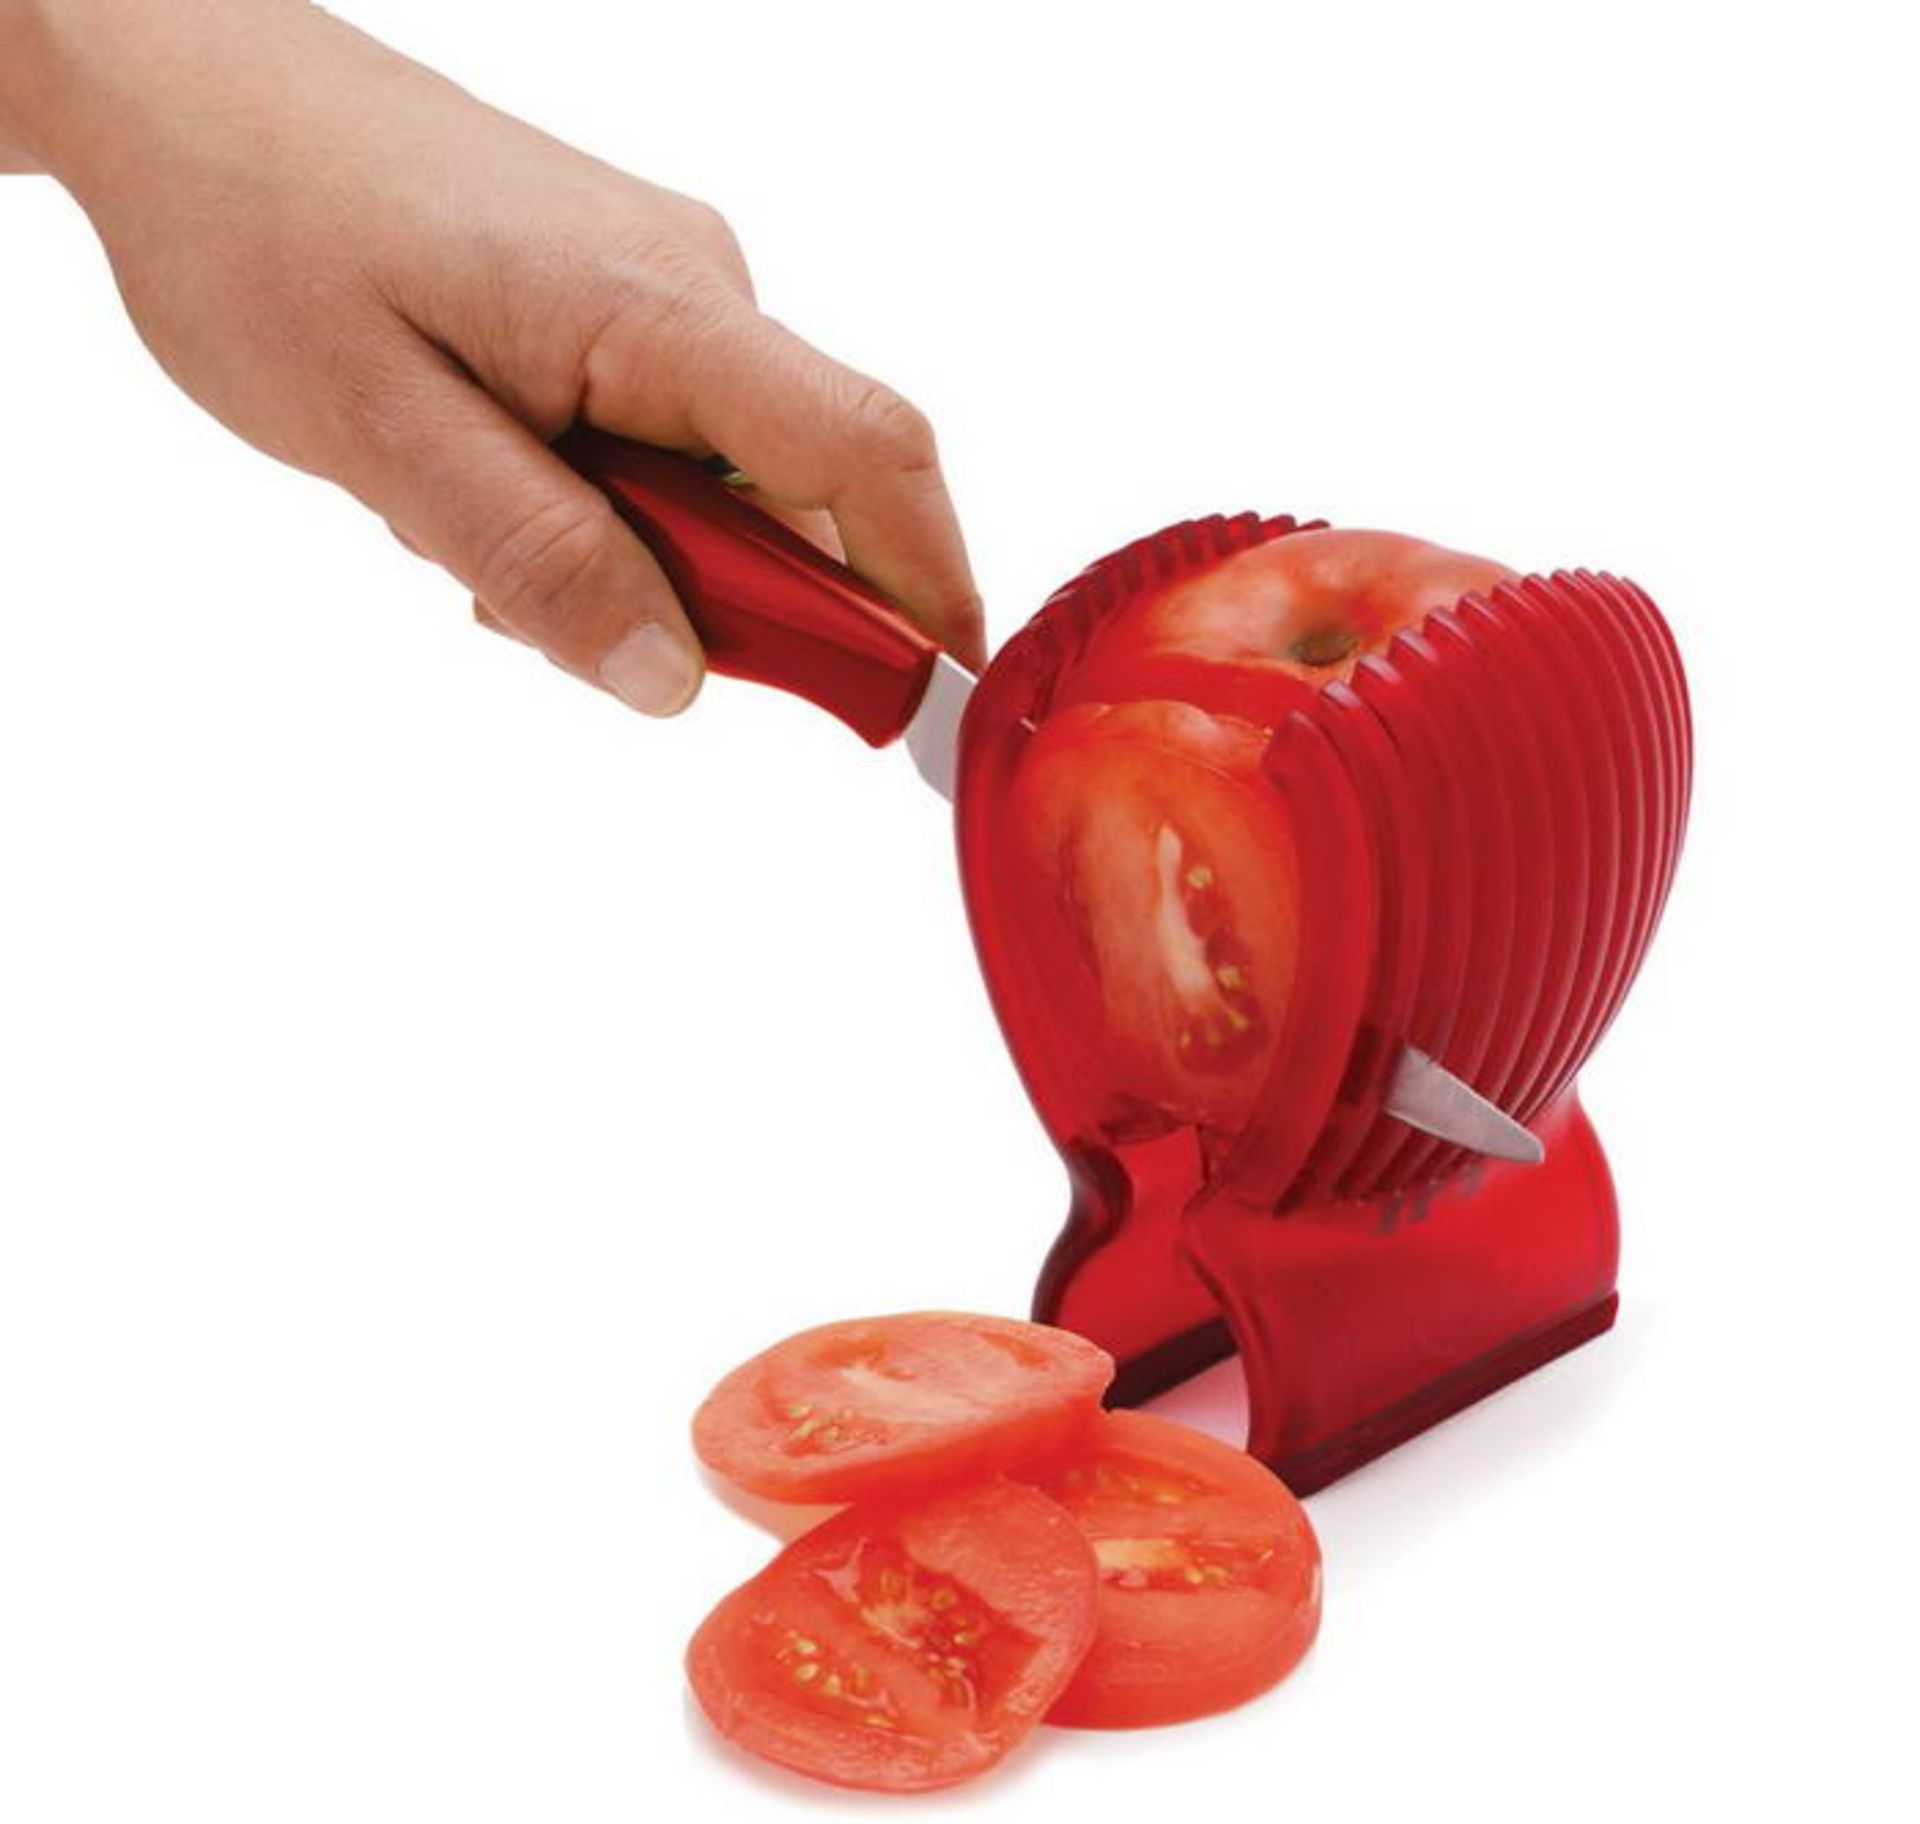 Joie-Tomato-Slicer